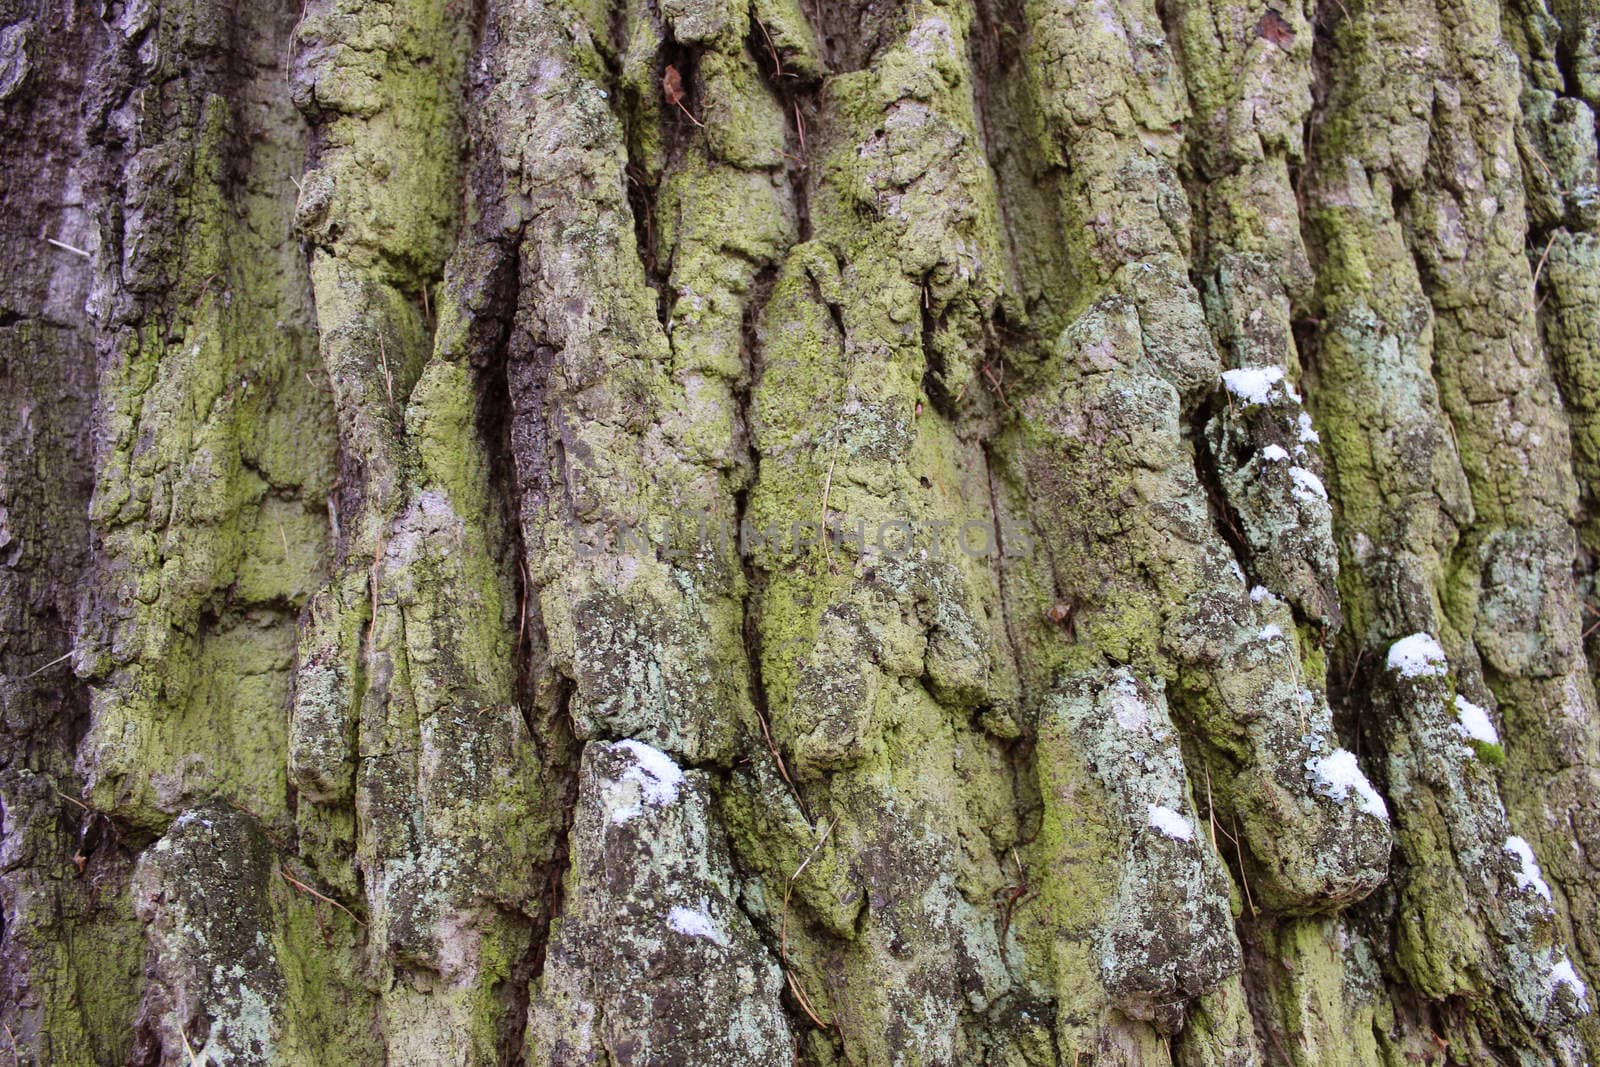 Maple tree bark in the Gatchina park in winter, November 2015